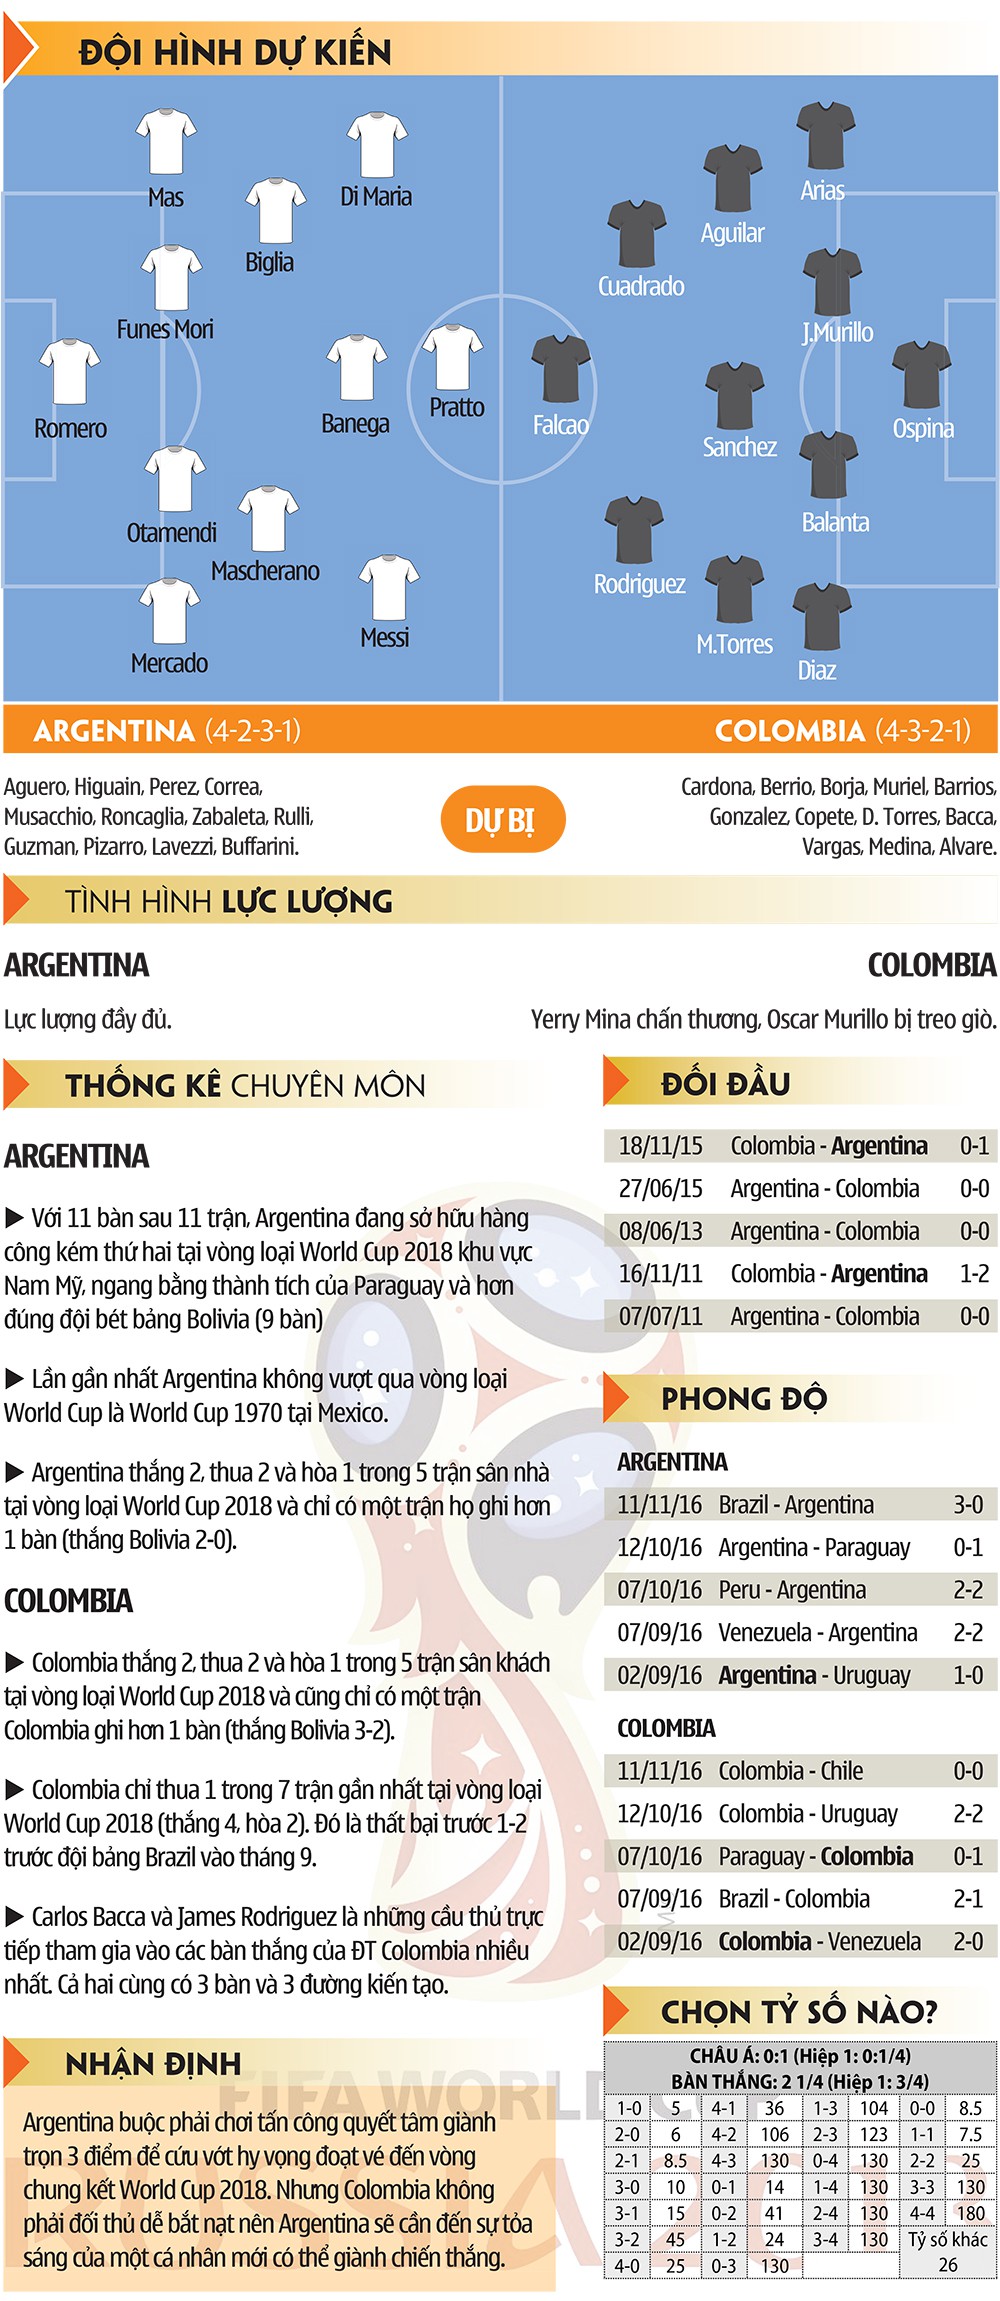 Argentina-Comlombia: Loại Aguero, Higuain, đi tìm “Martin Palermo 2.0”ư